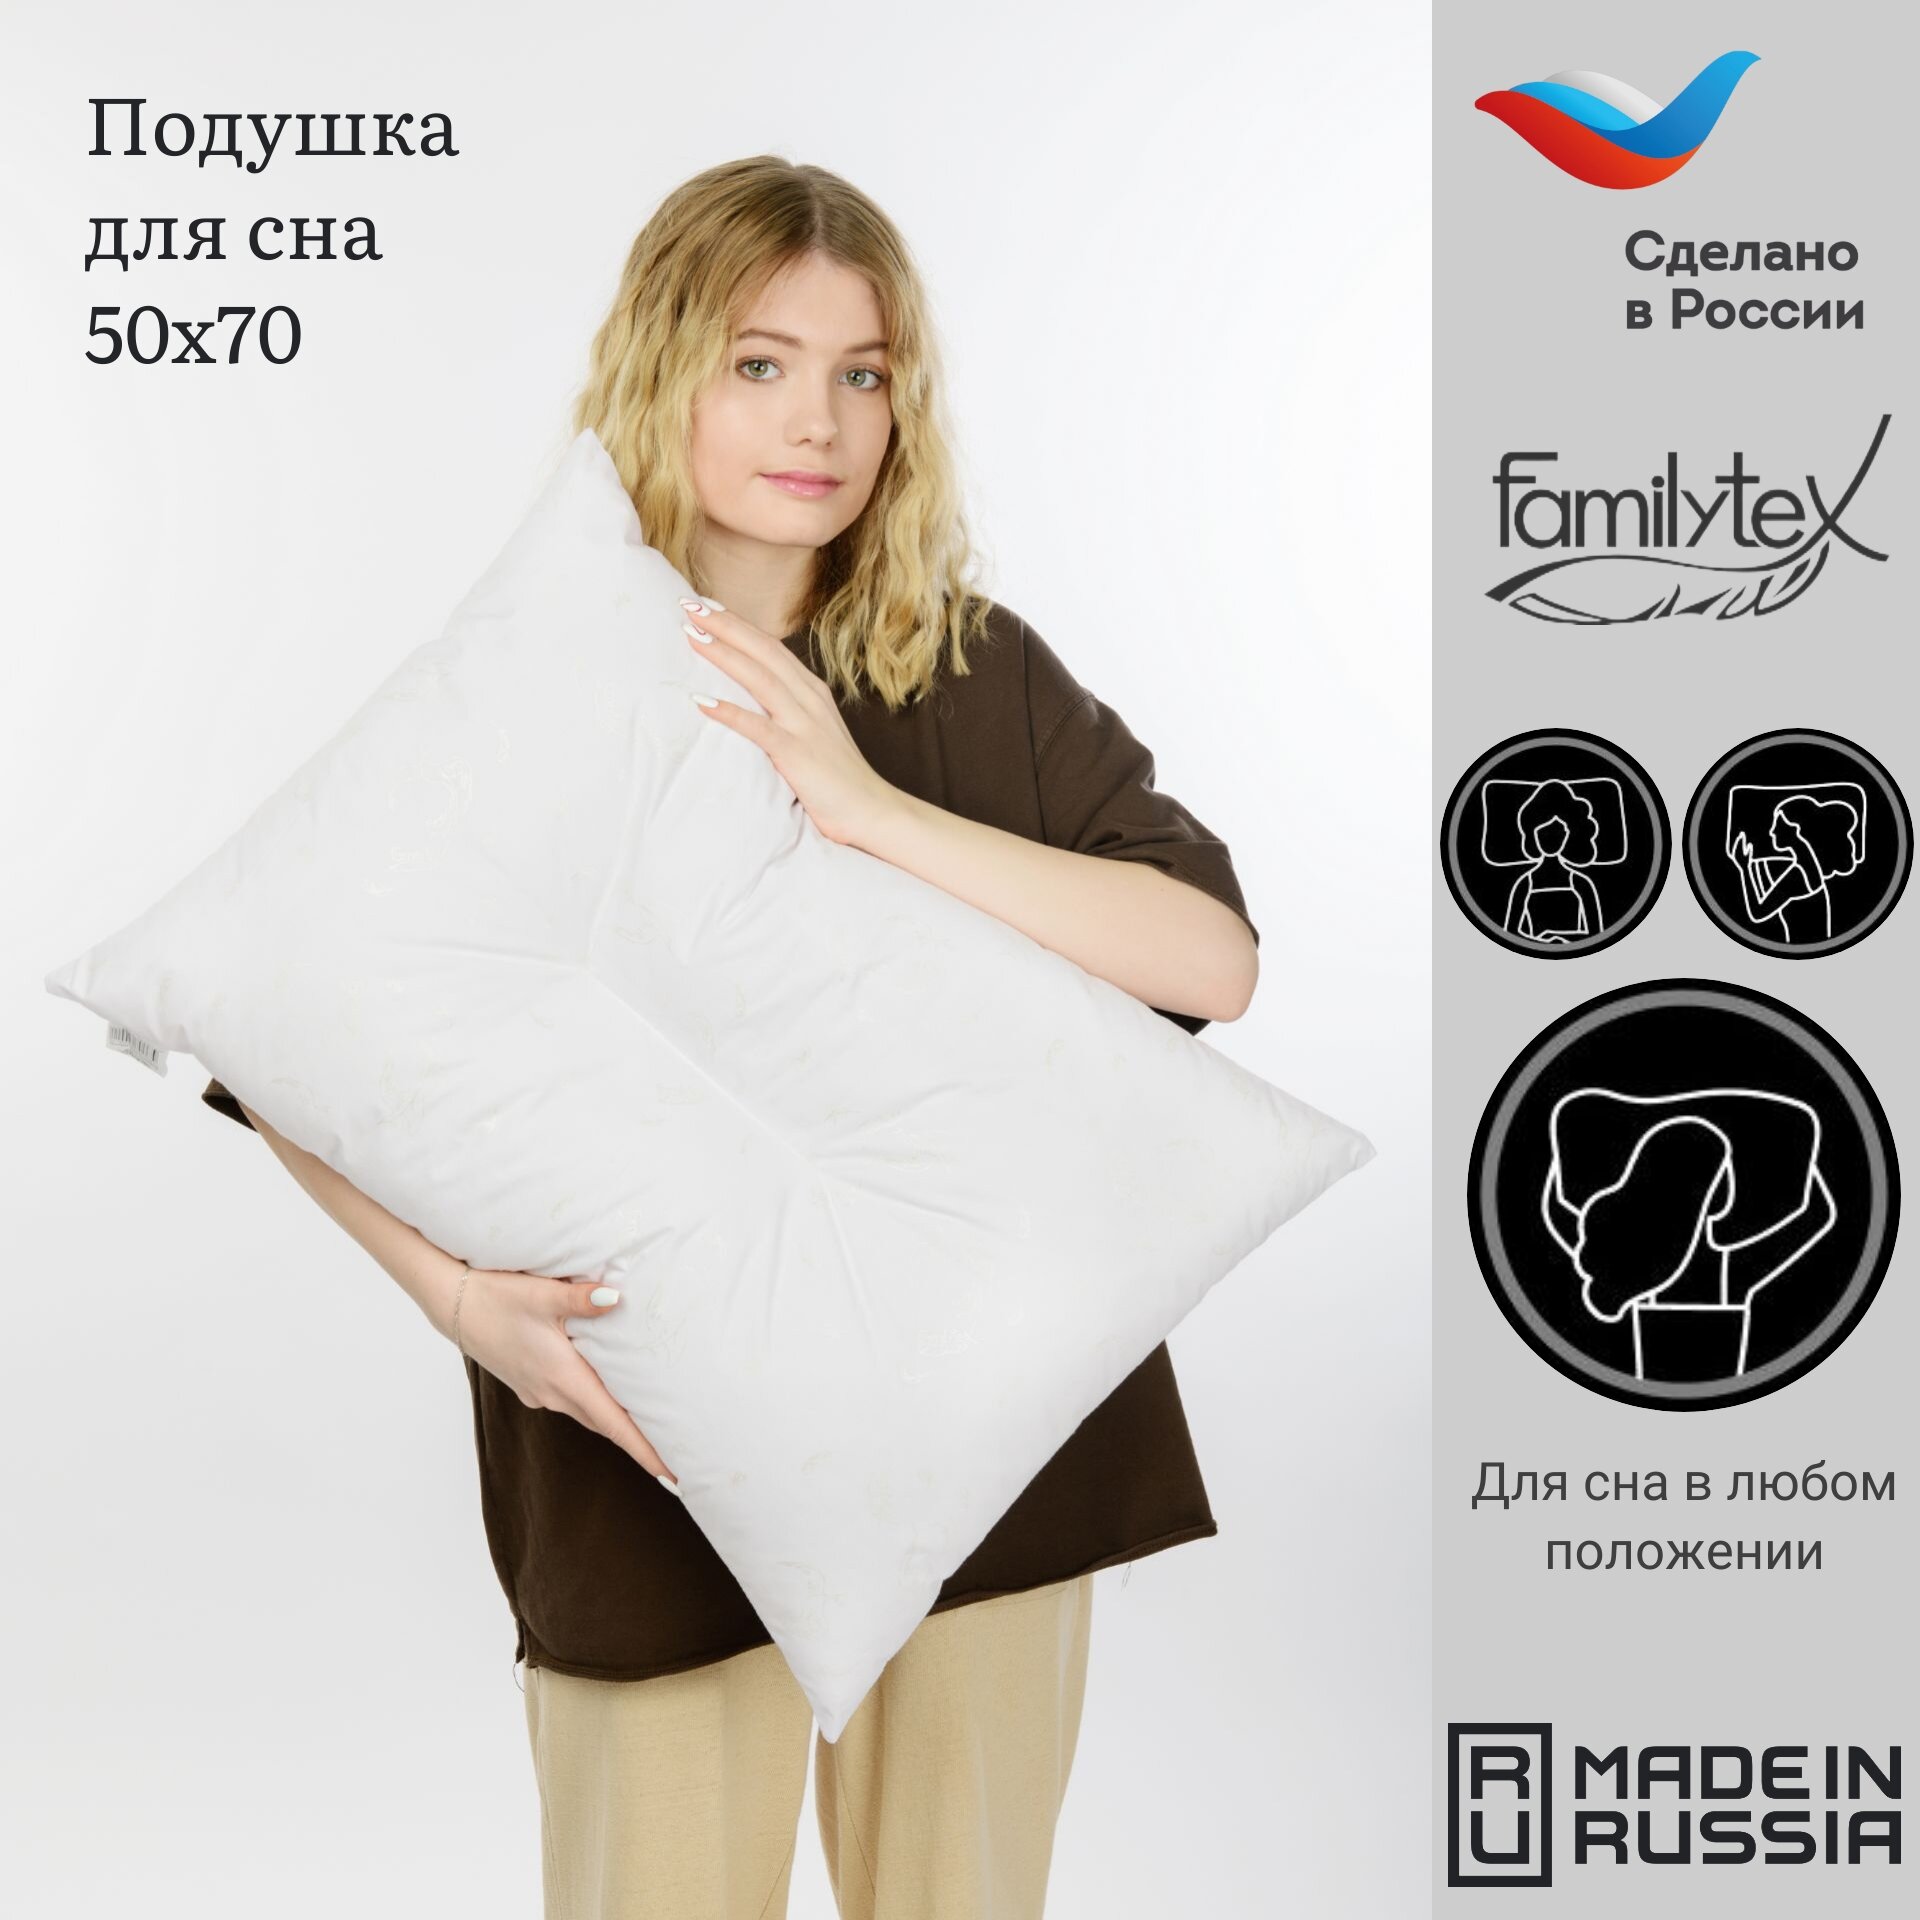 Анатомическая Подушка для сна 50х70 см, Familytex, подушка с перегородкой, артикул ПСС(50х70)